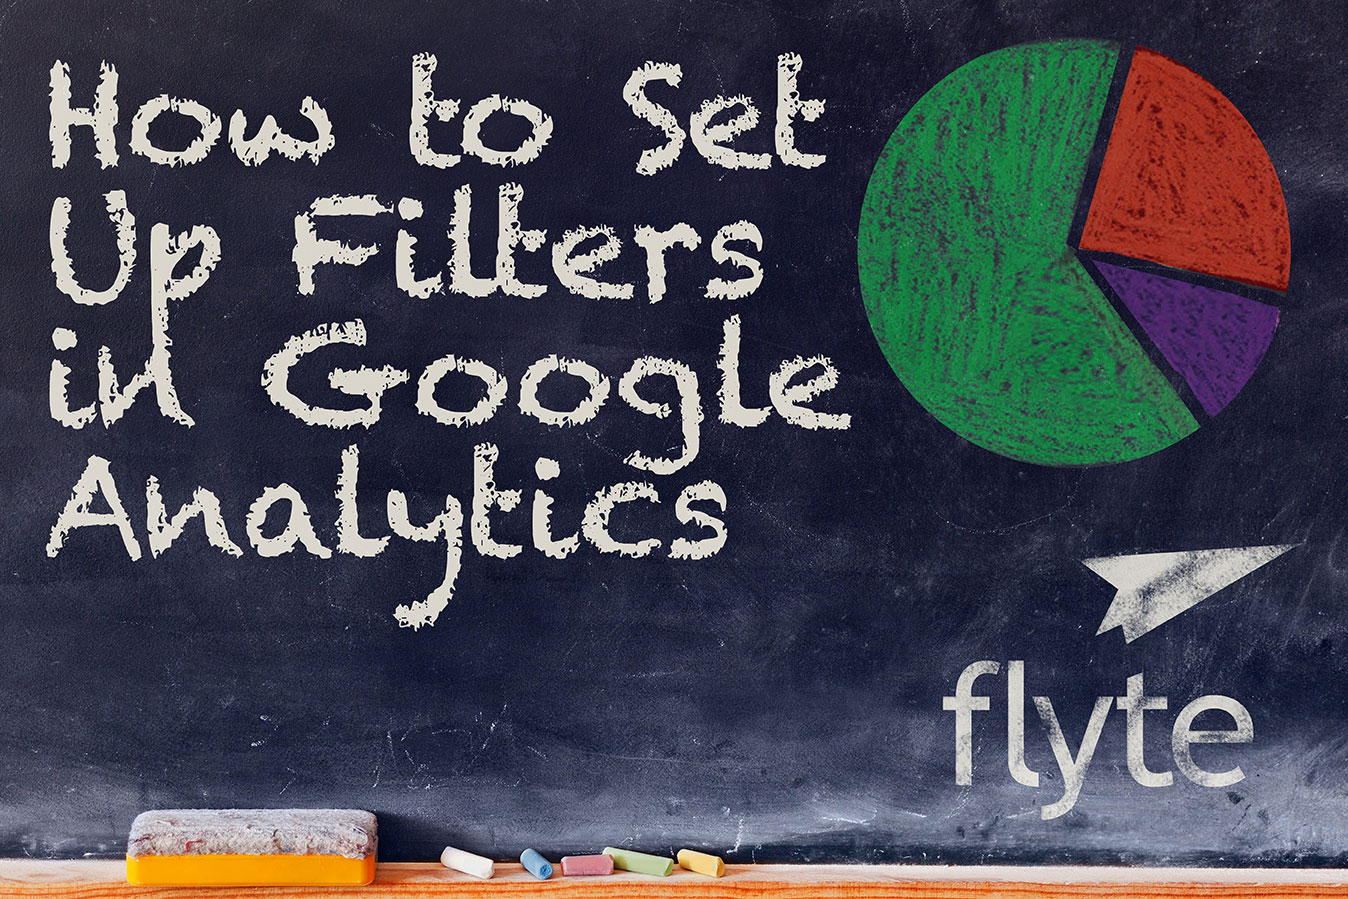 Google Analytics Filters